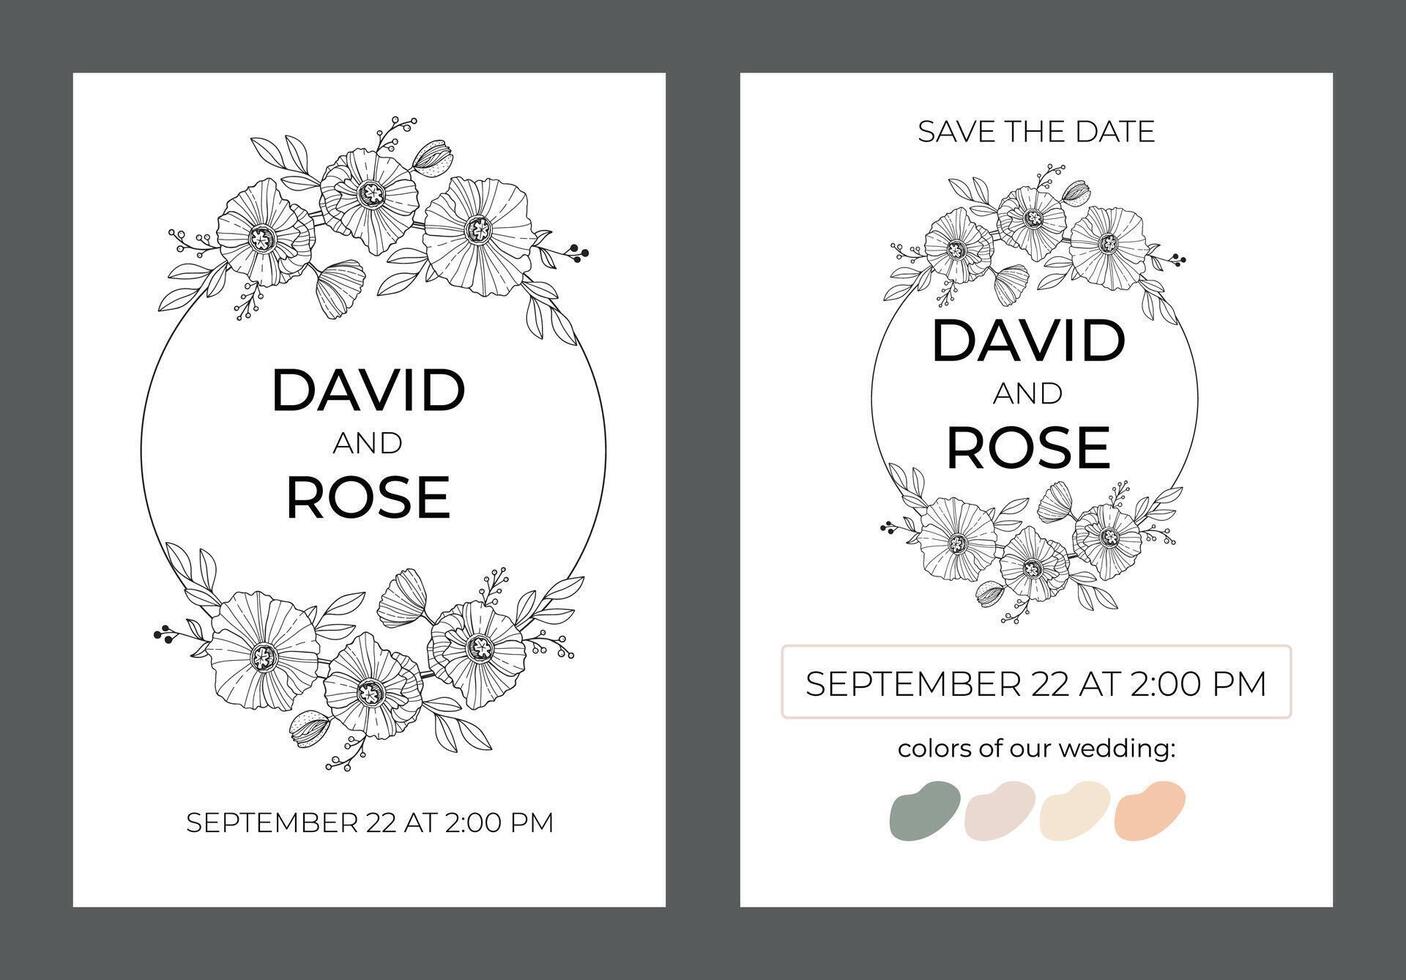 Wedding invitation in a minimalist style. A flower wreath vector hand drawn illustration